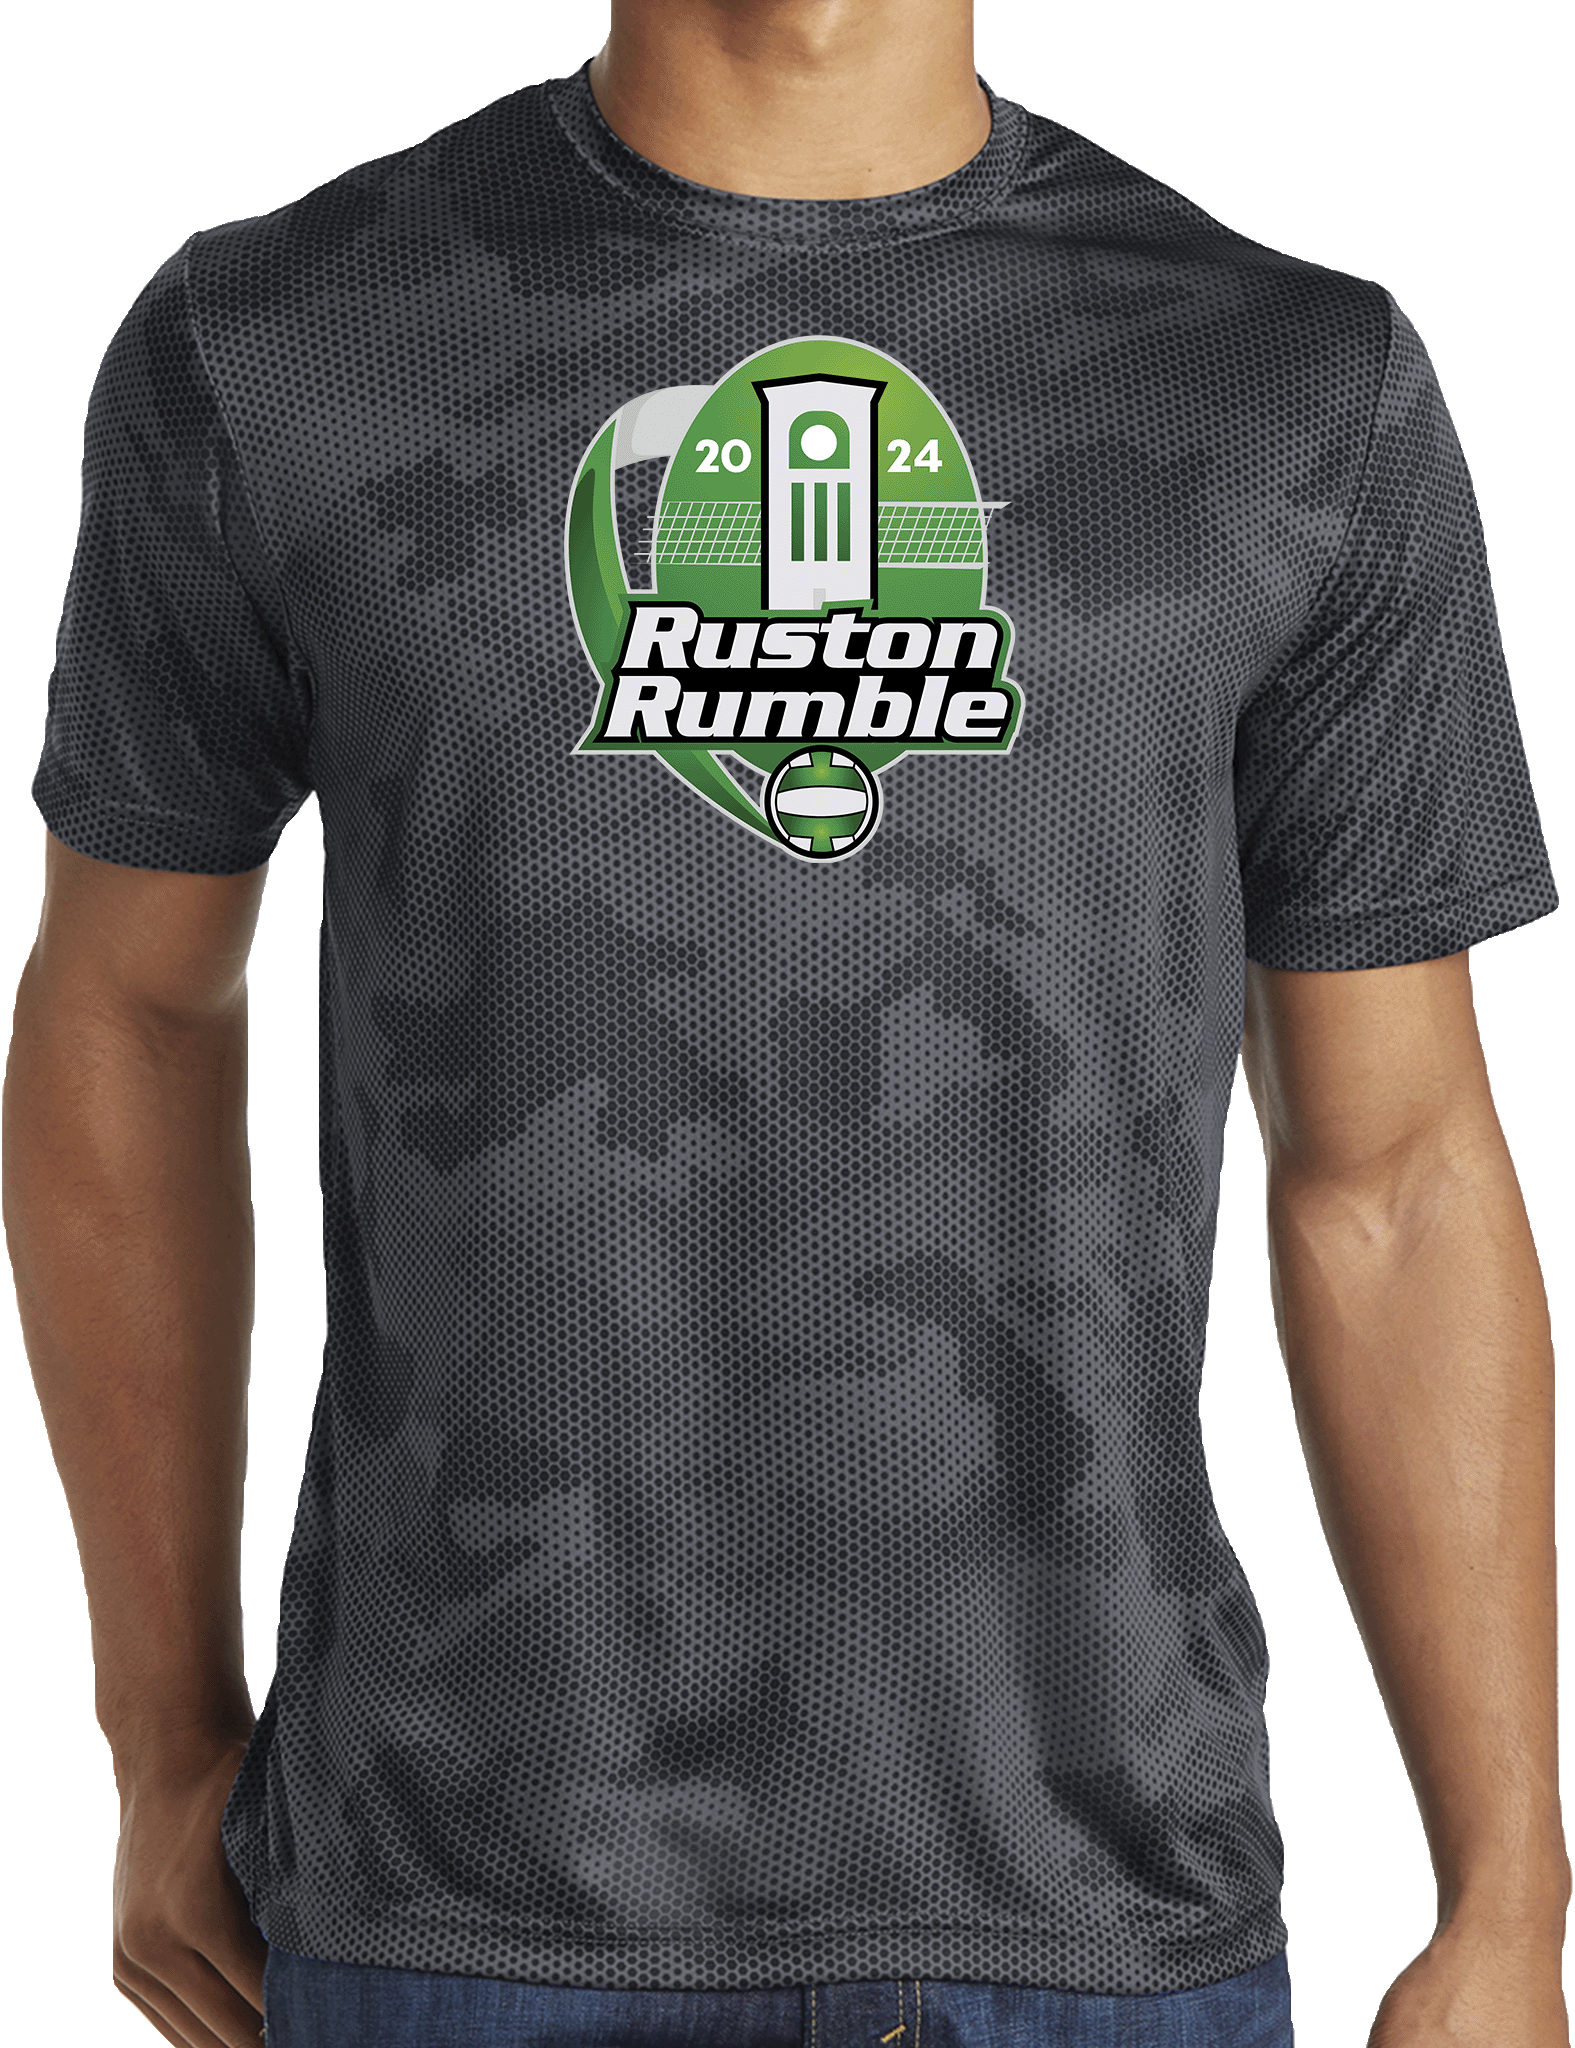 Performance Shirts - 2024 Ruston Rumble